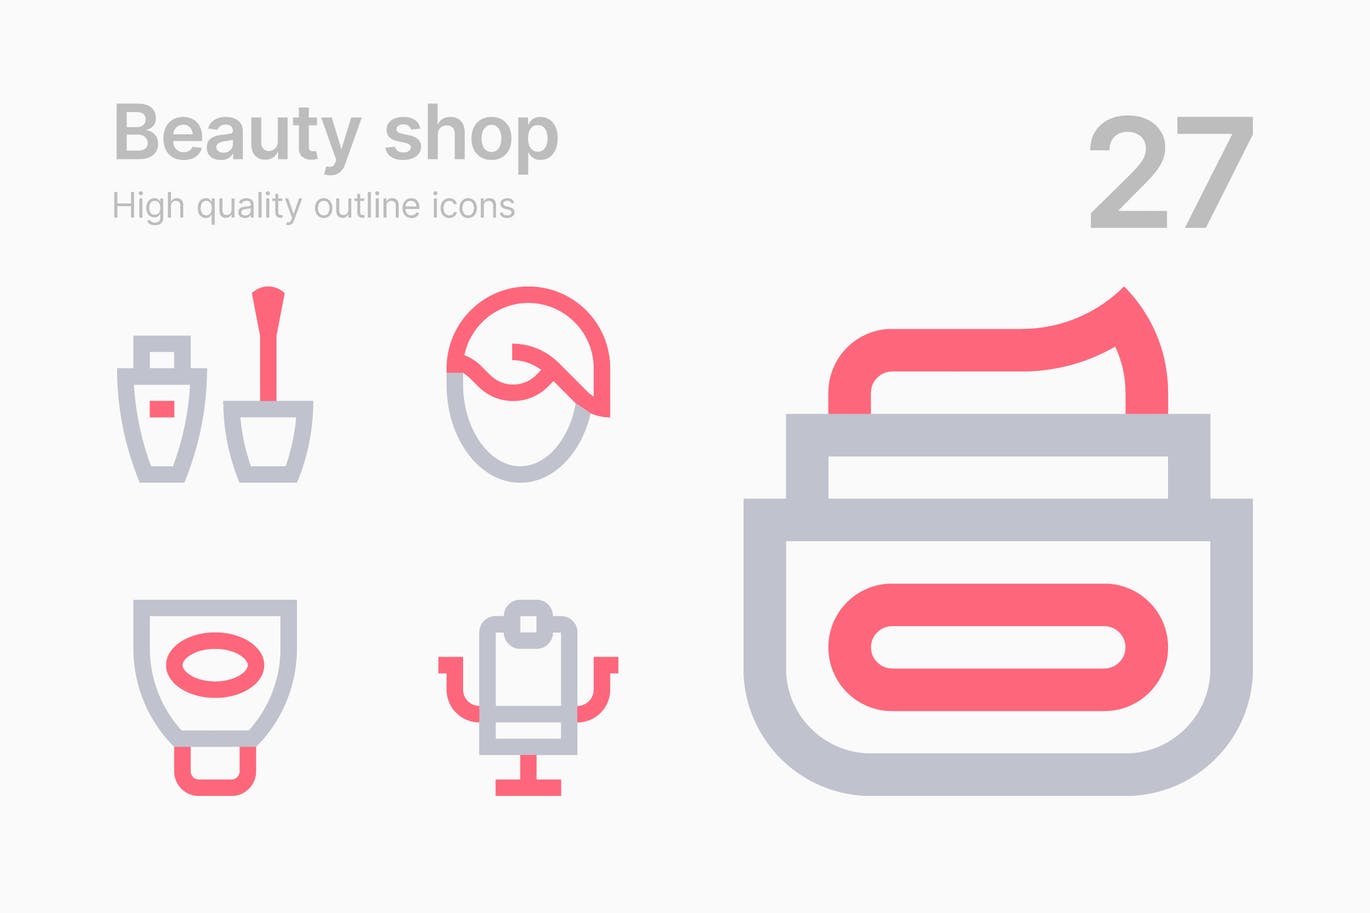 A beauty shop outline icons